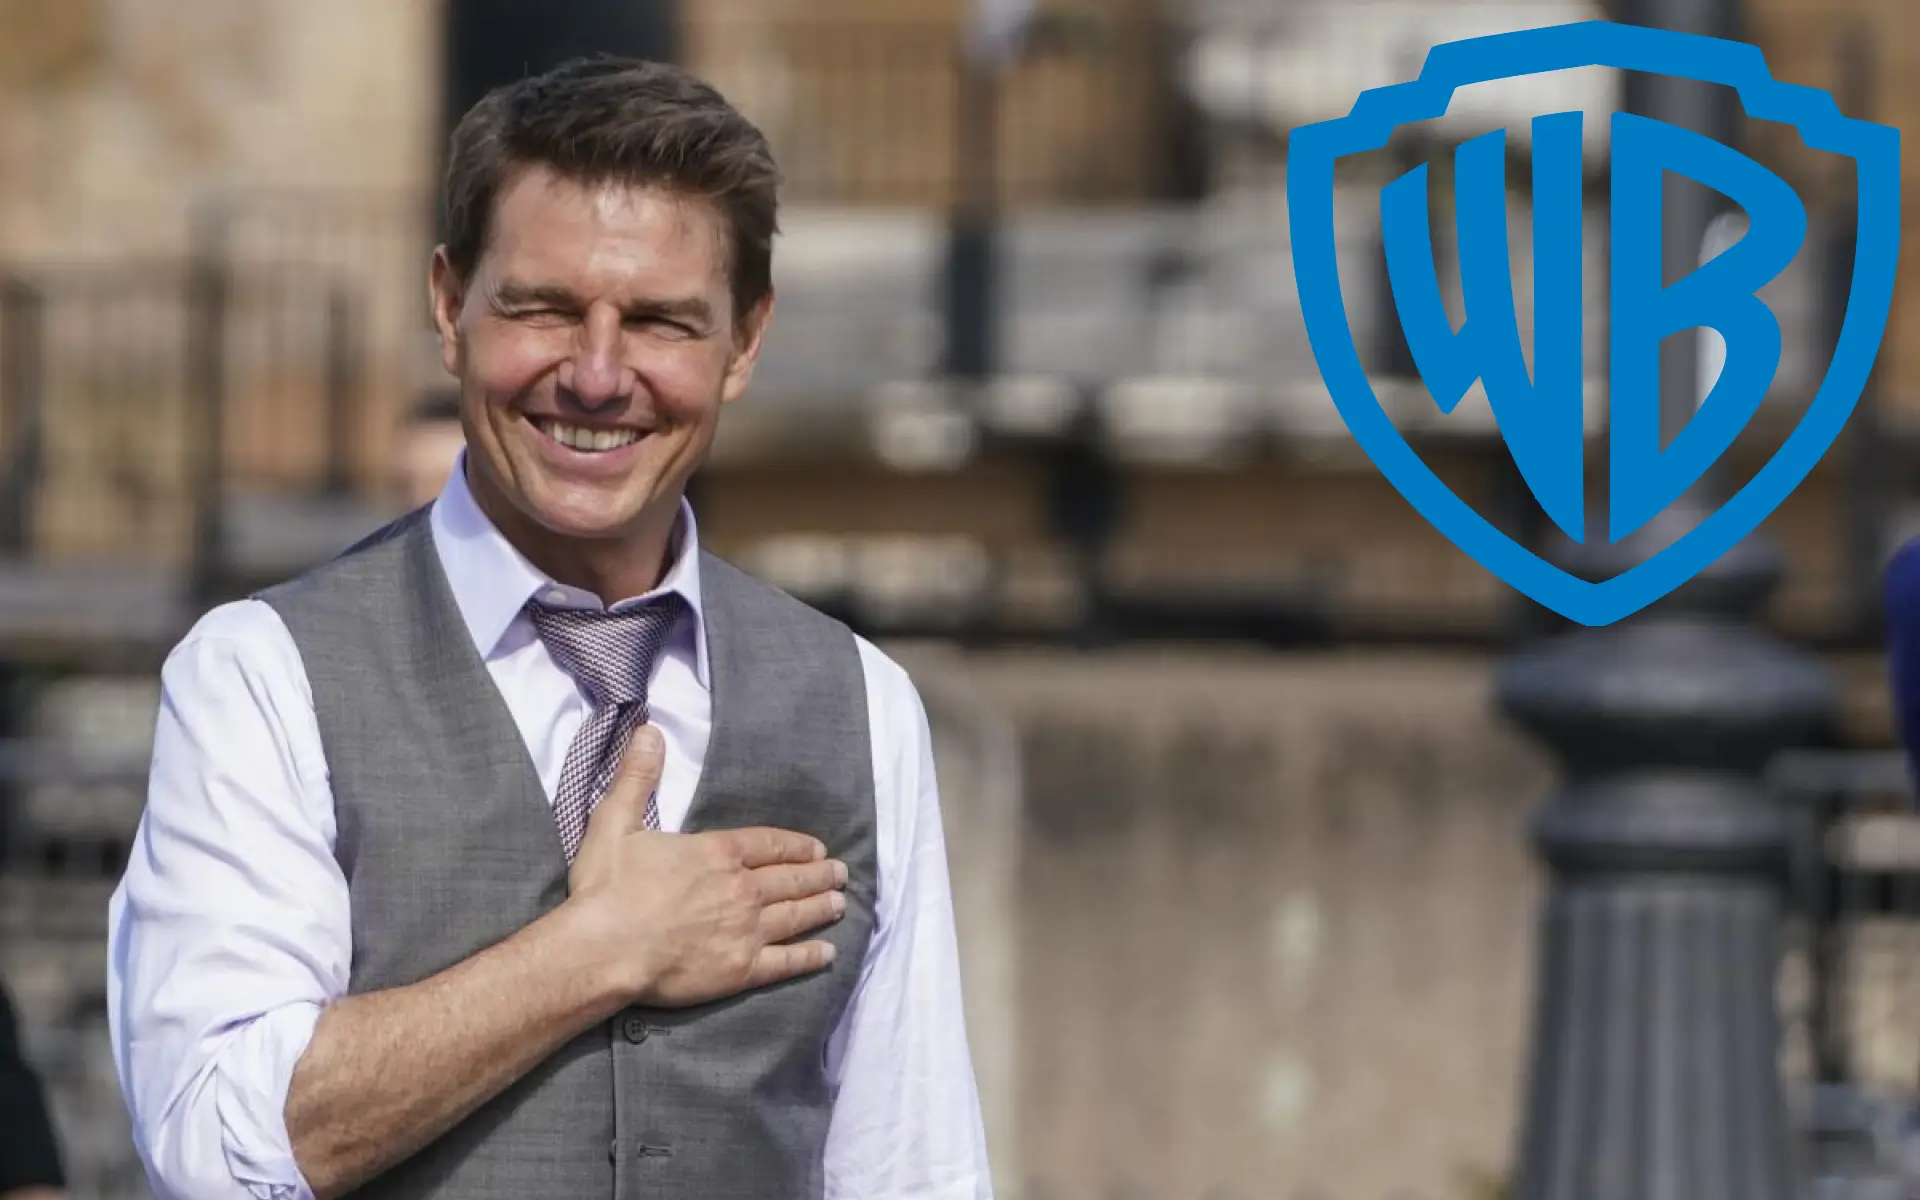 Tom Cruise's New Partnership With Warner Bros.